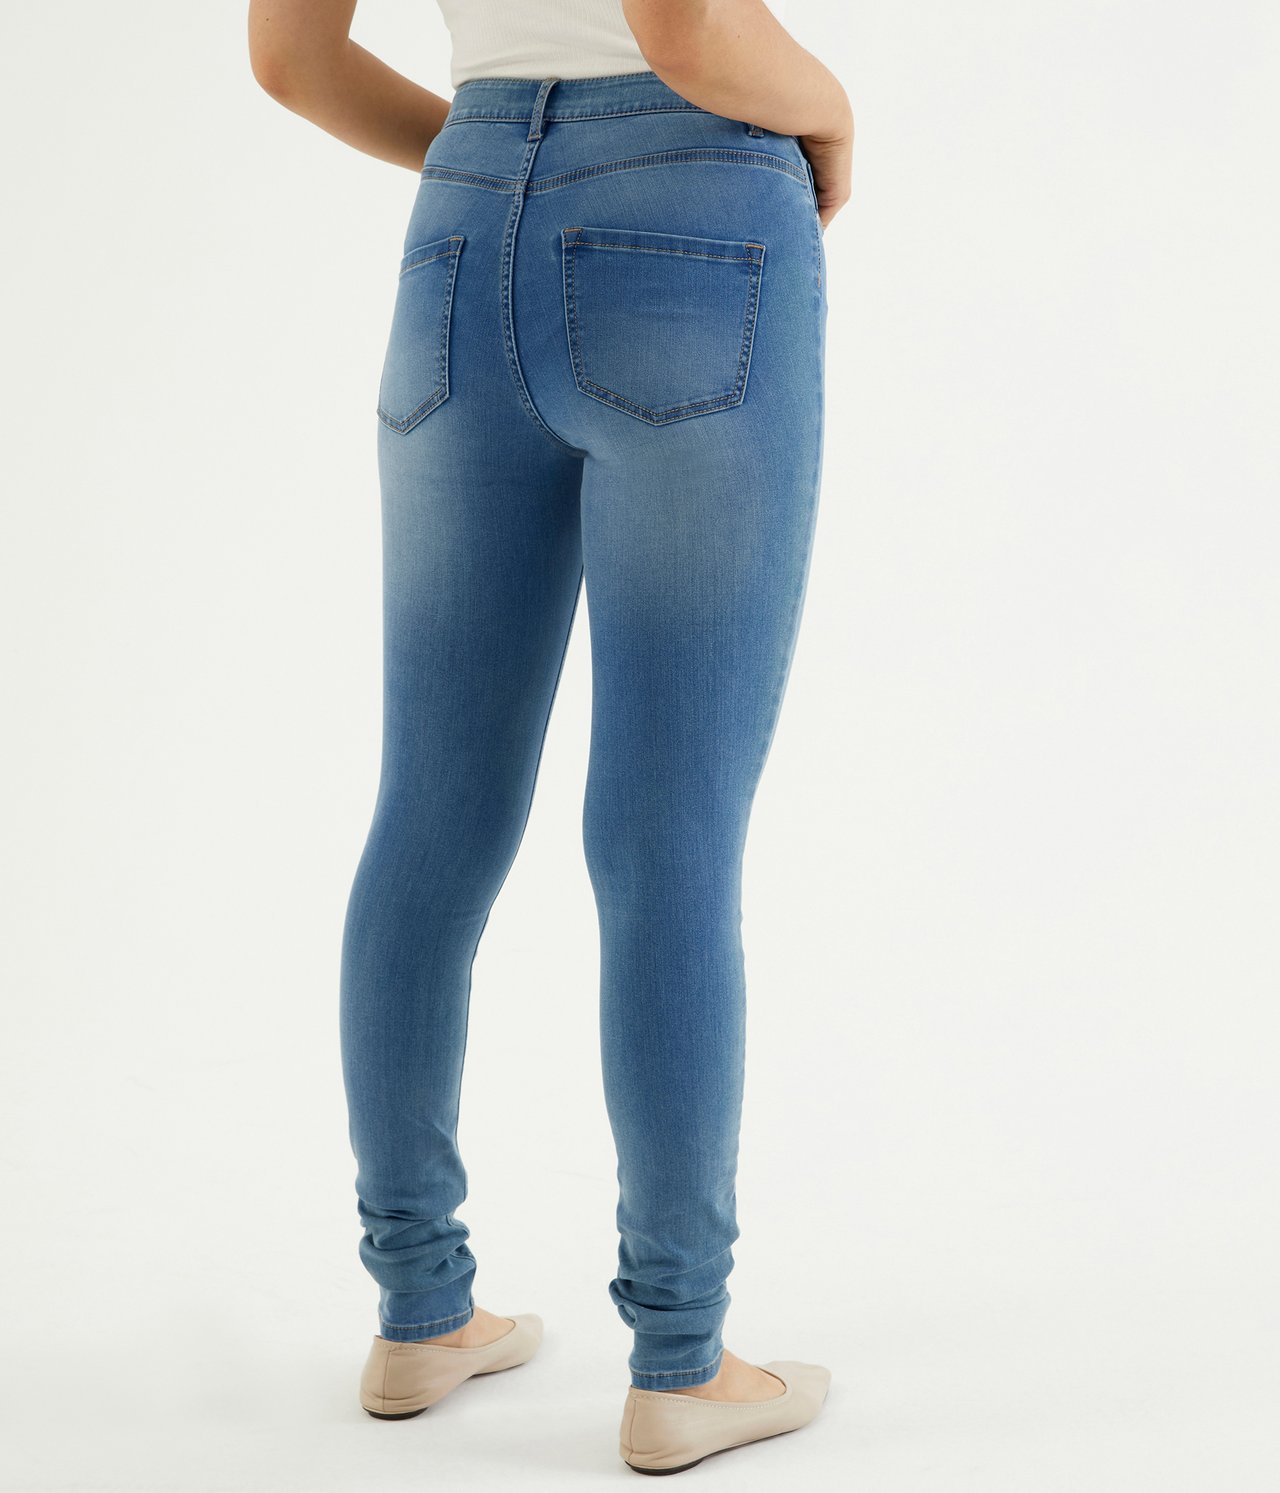 Super slim jeans extra long leg - Denimi - 4